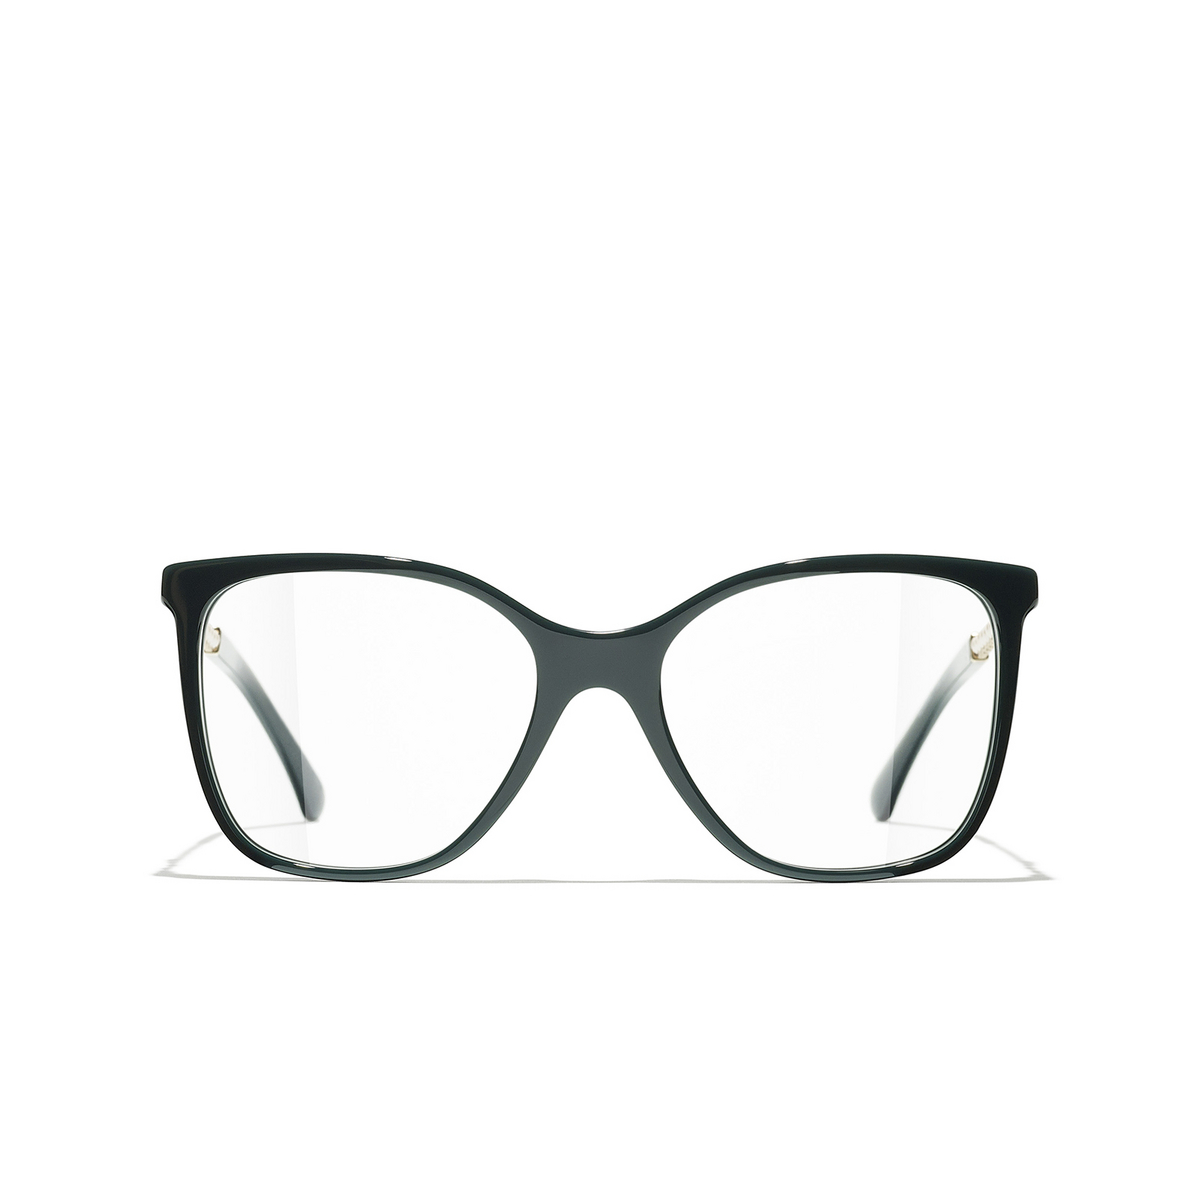 CHANEL square Eyeglasses 1459 Dark Green - front view